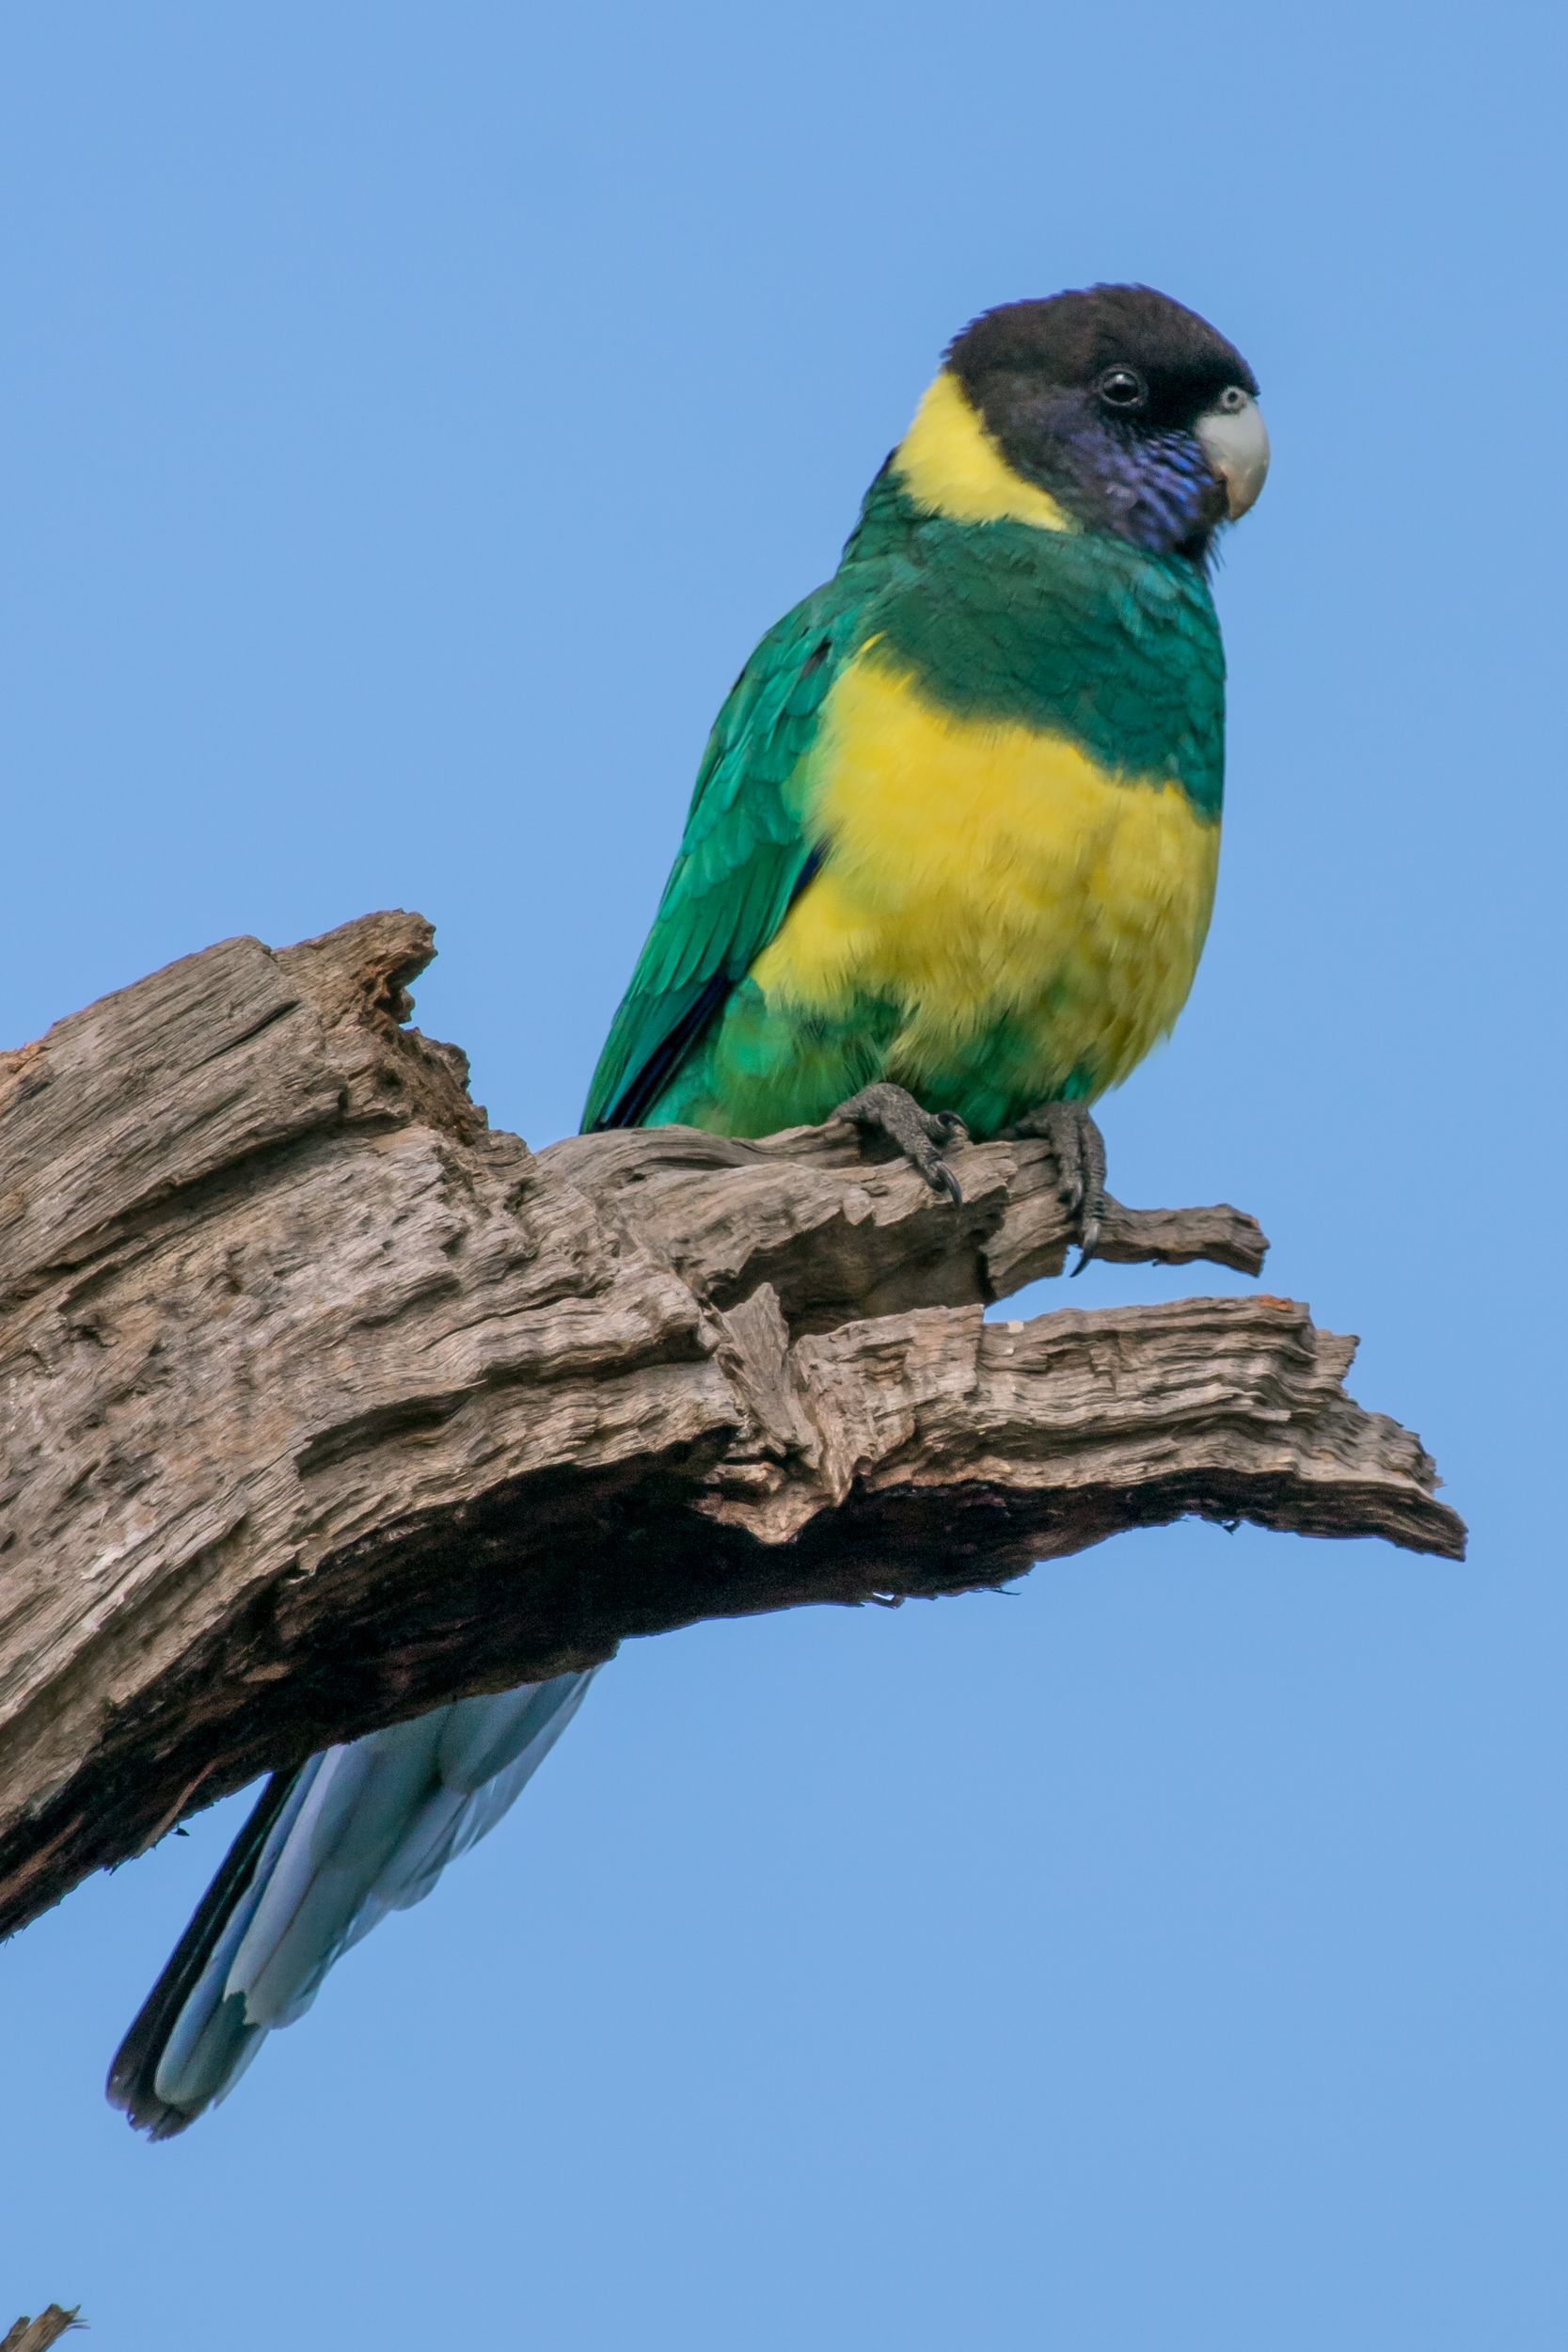 Southern Eyre Peninsula Bird Watching Tour, South Australia